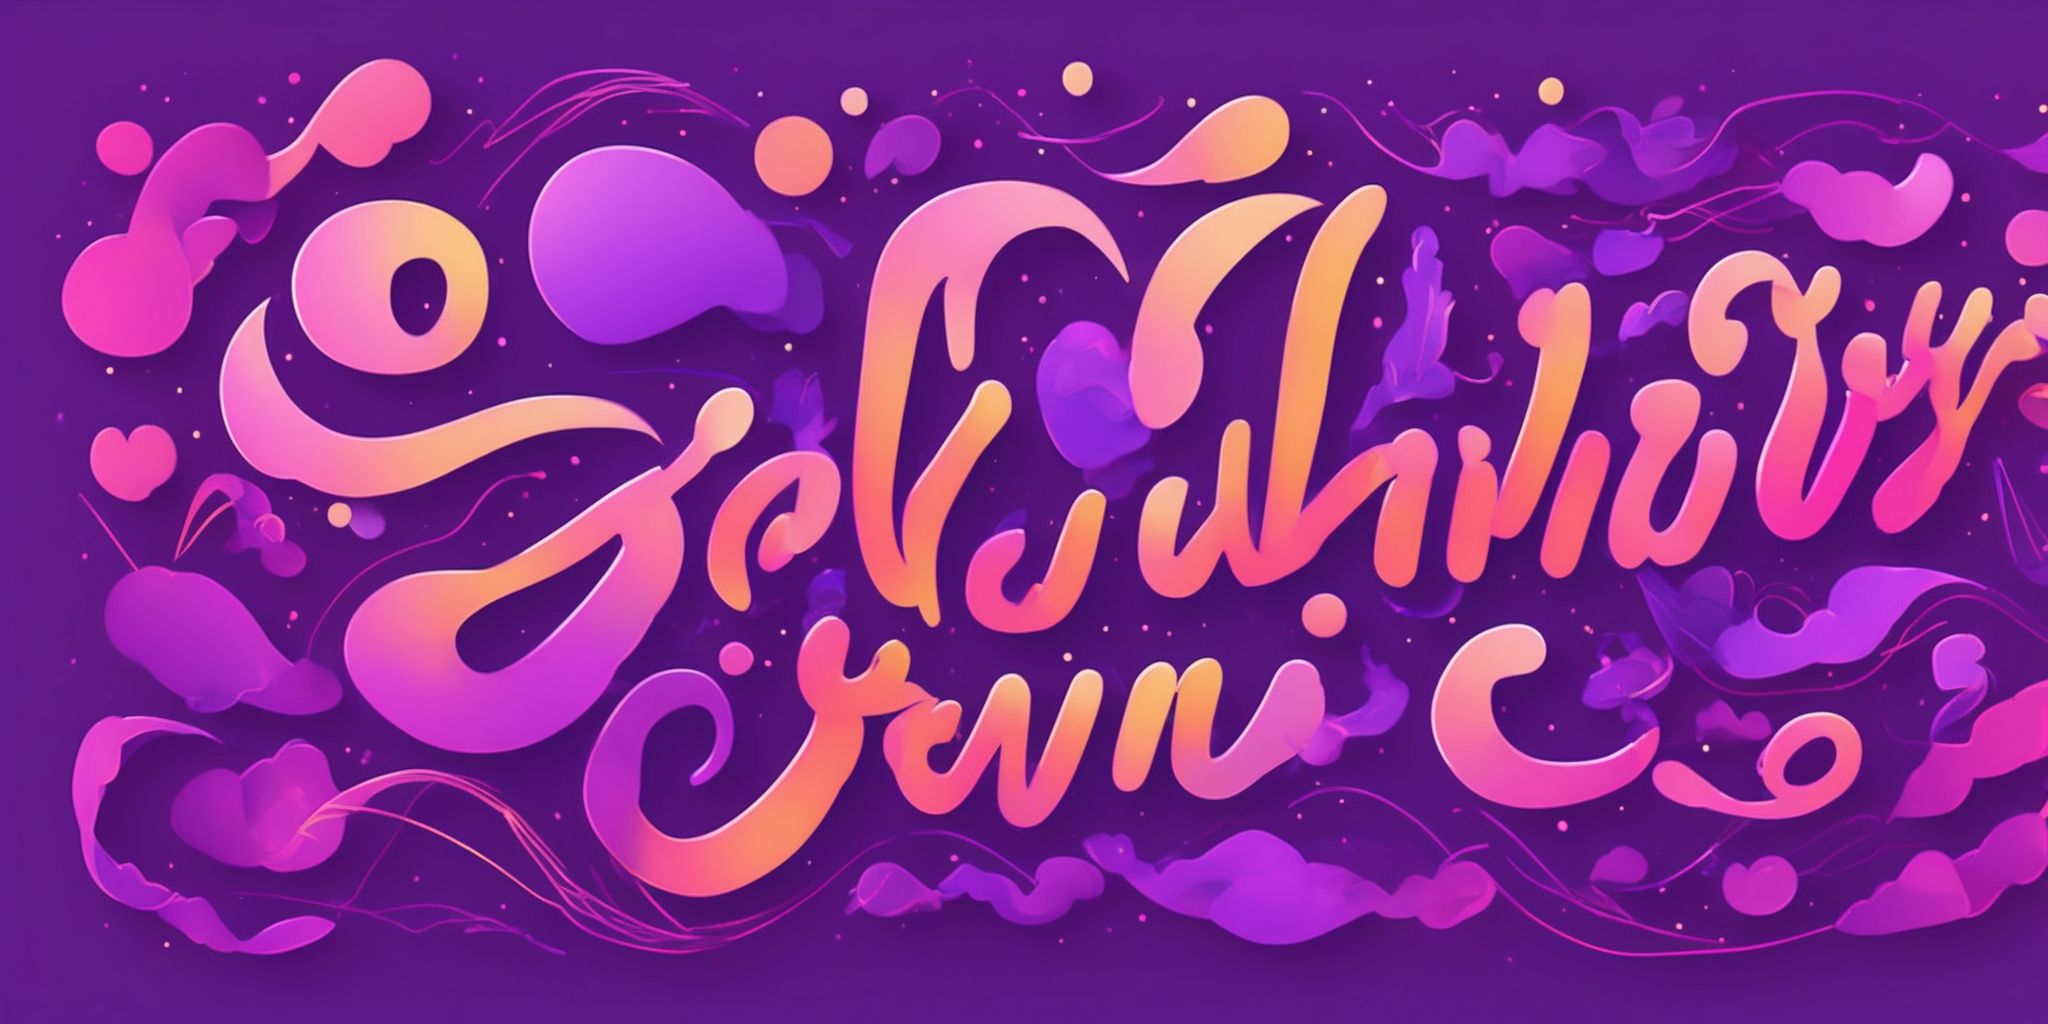 Script in flat illustration style, colorful purple gradient colors